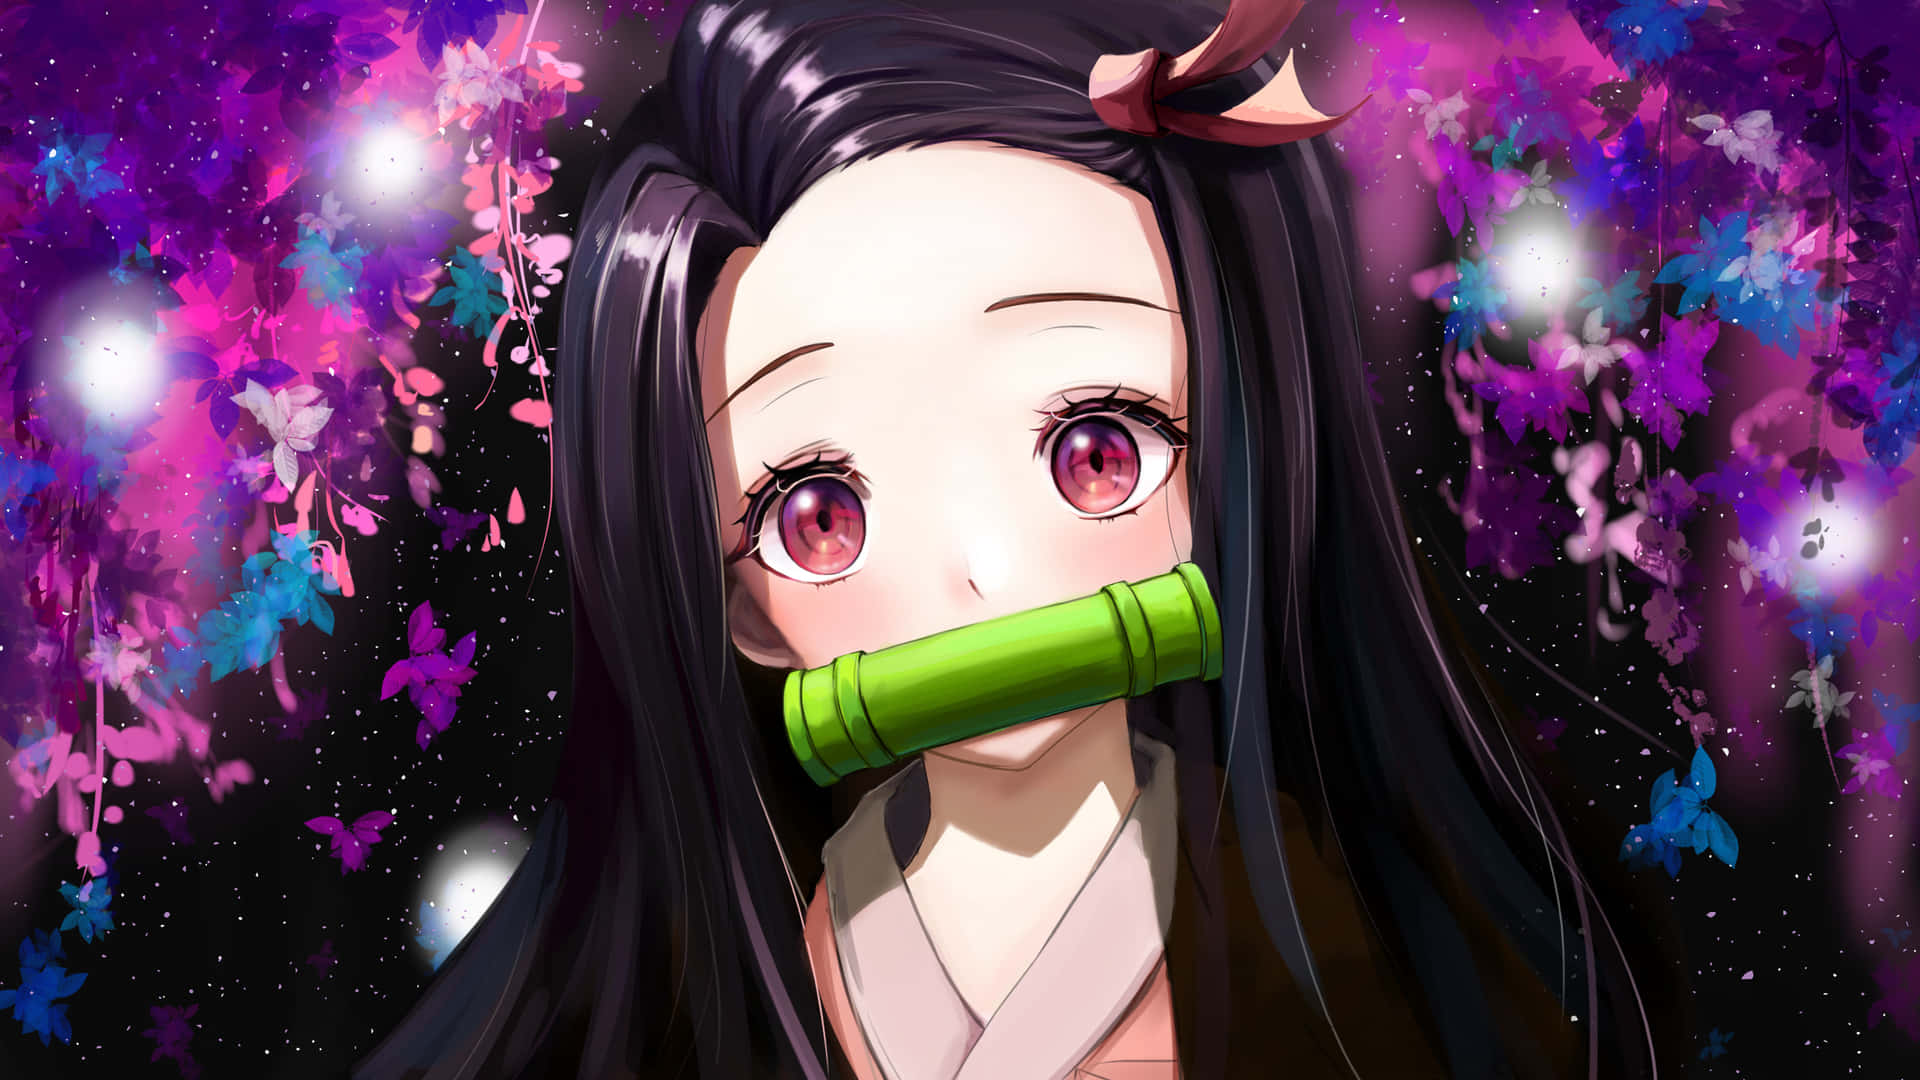 En pige med langt hår og grønne øjne holder en bambustav.